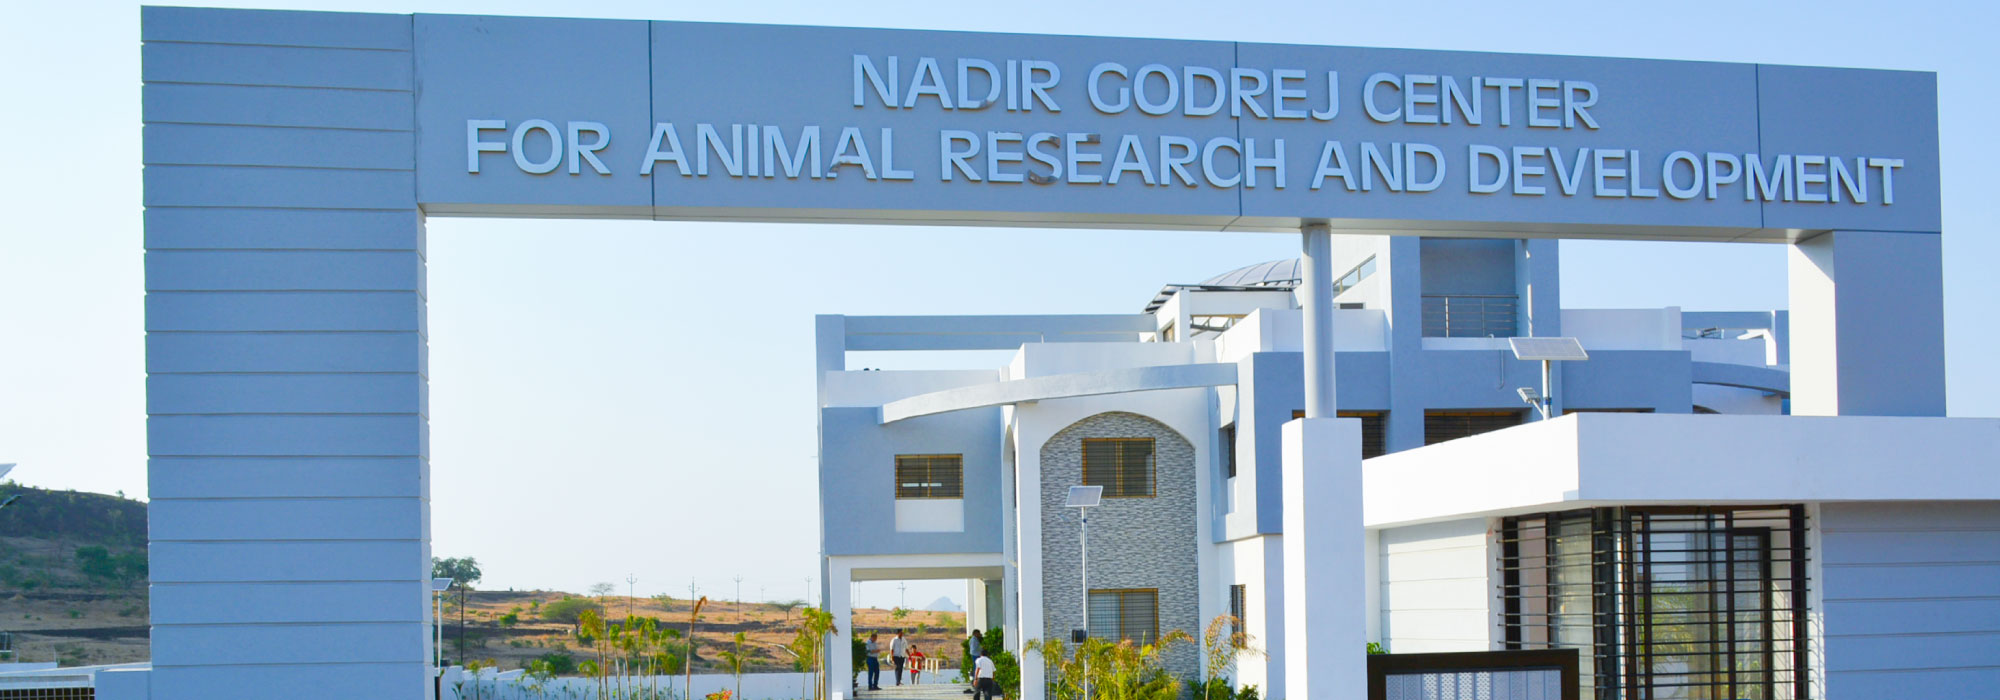 Nadir Godrej Center for Animal R&D